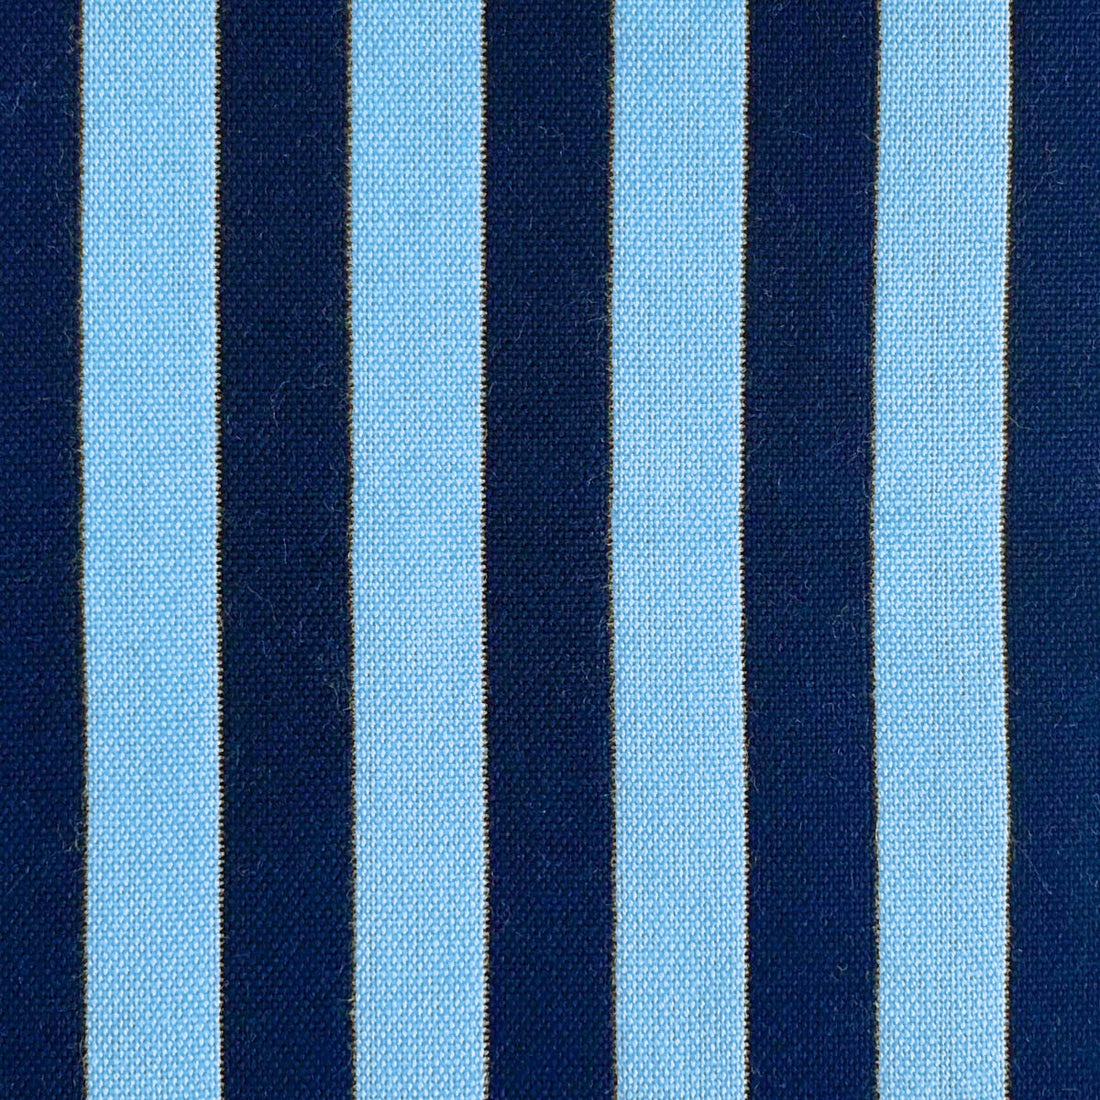 Benjamin fabric in azul color - pattern LCT1057.006.0 - by Gaston y Daniela in the Lorenzo Castillo VI collection